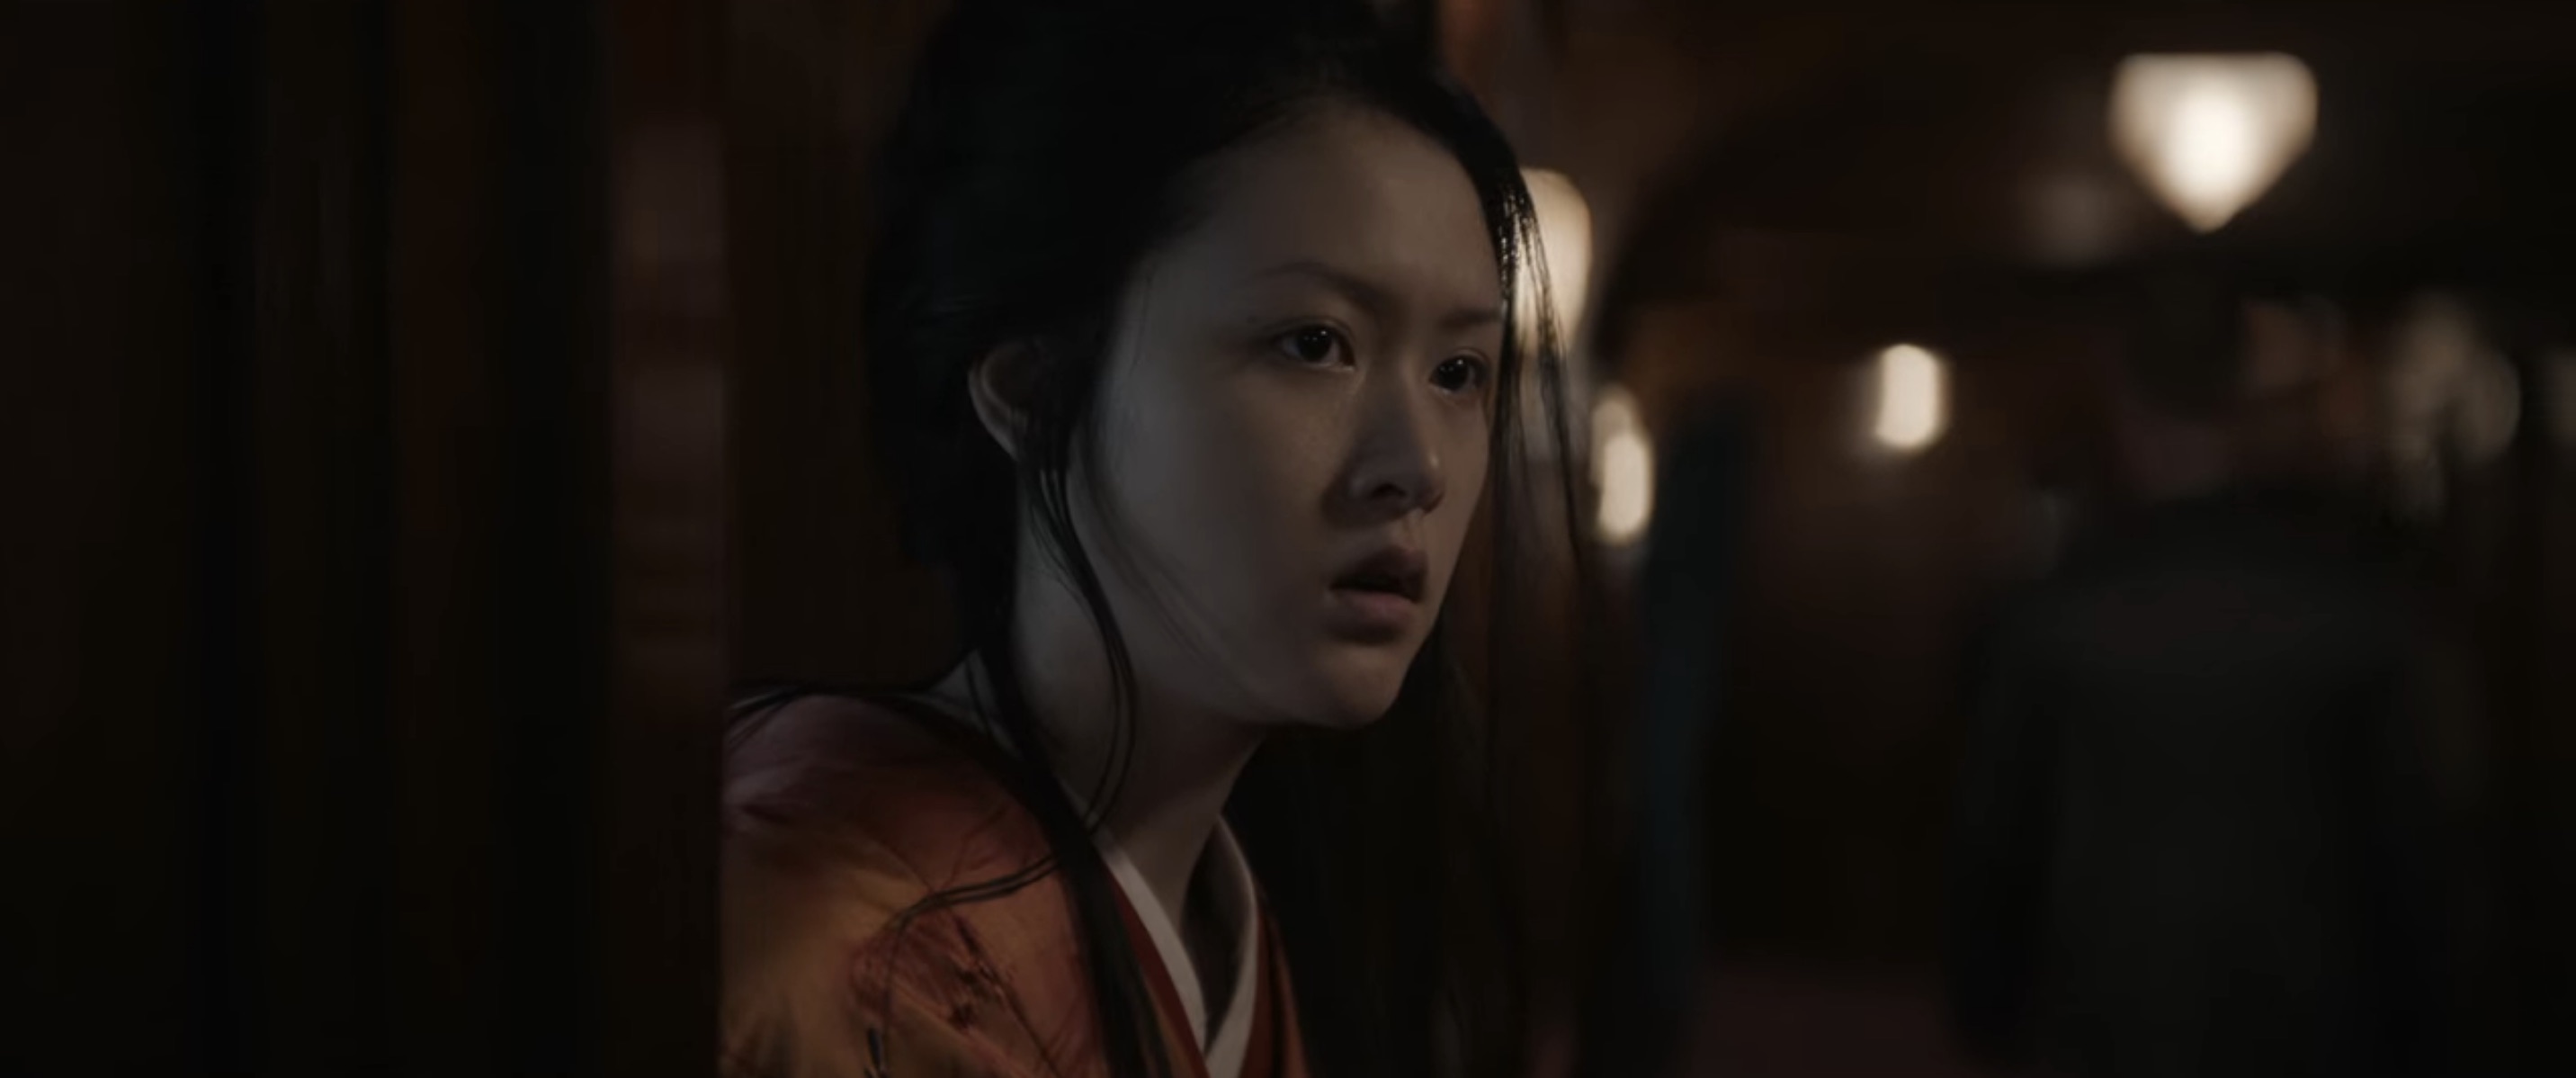 1899 Cast on Netflix - Isabella Wei as Ling Yi